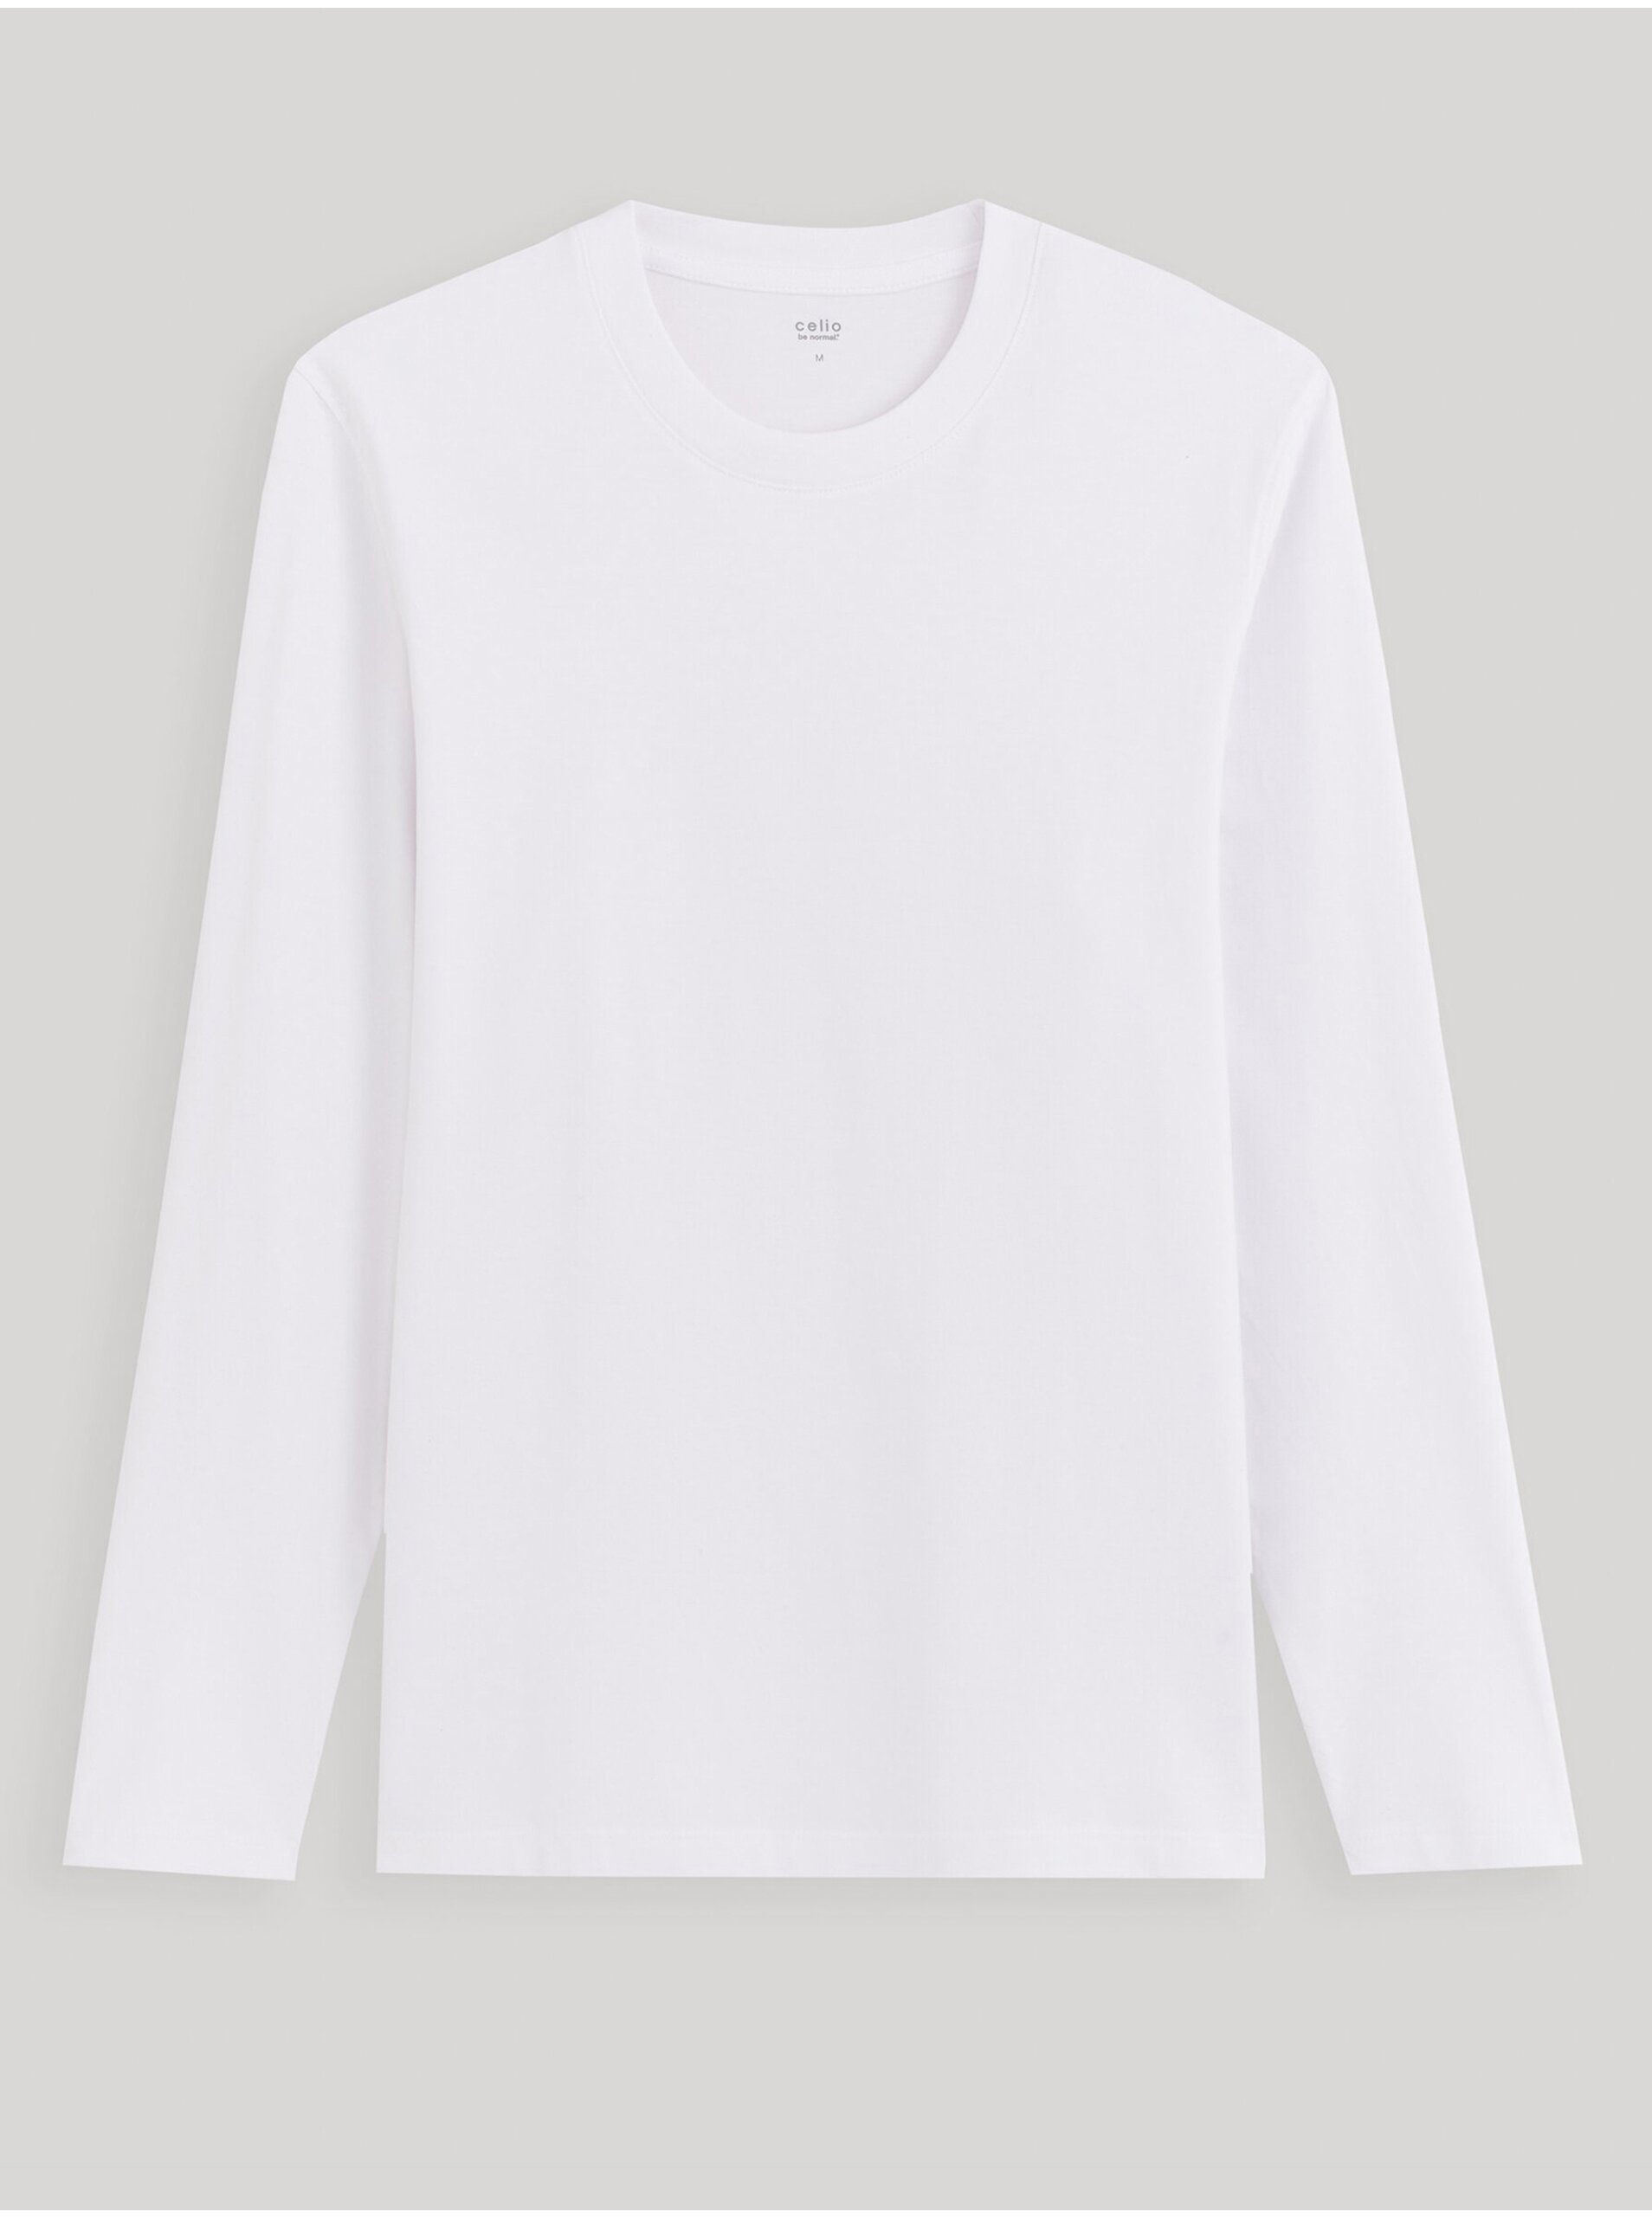 Lacno Biele pánske basic tričko Celio